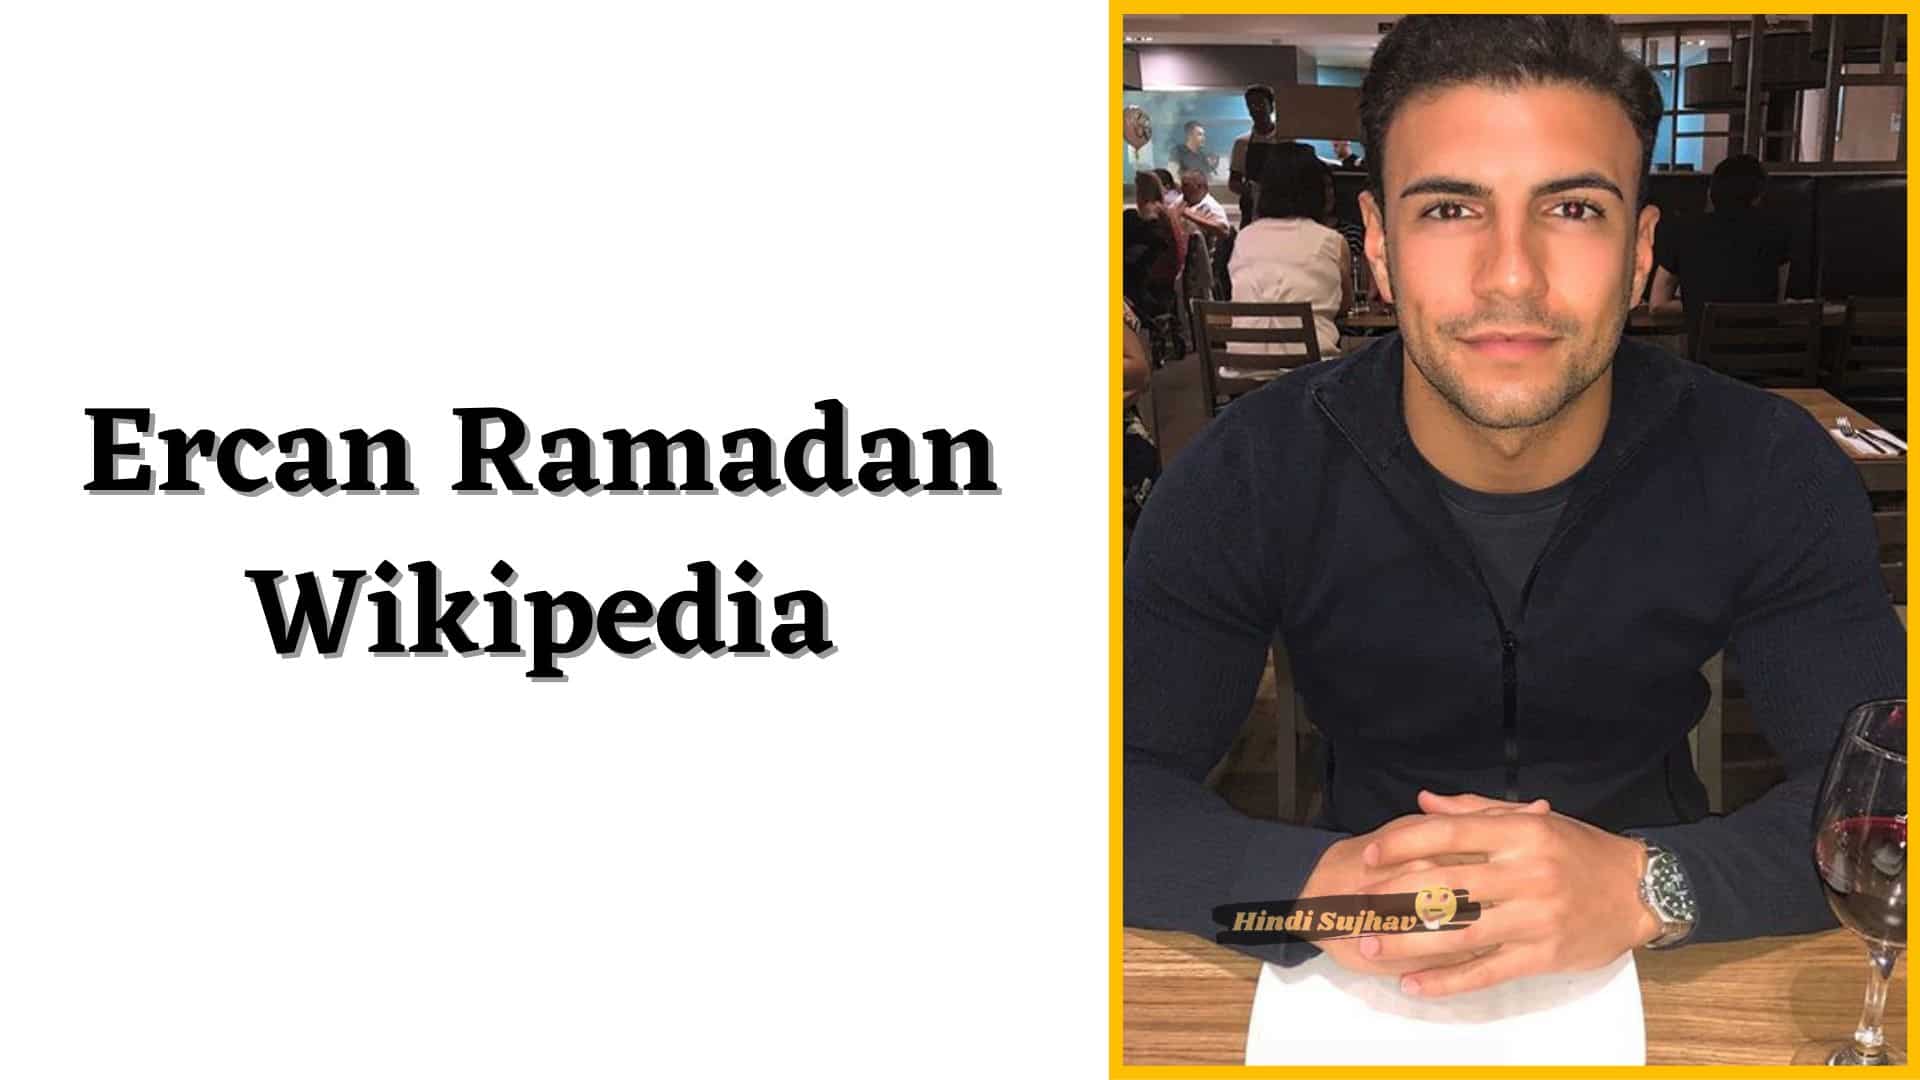 Ercan Ramadan Wikipedia, Wiki, Age, Turkish, Net Worth, Height